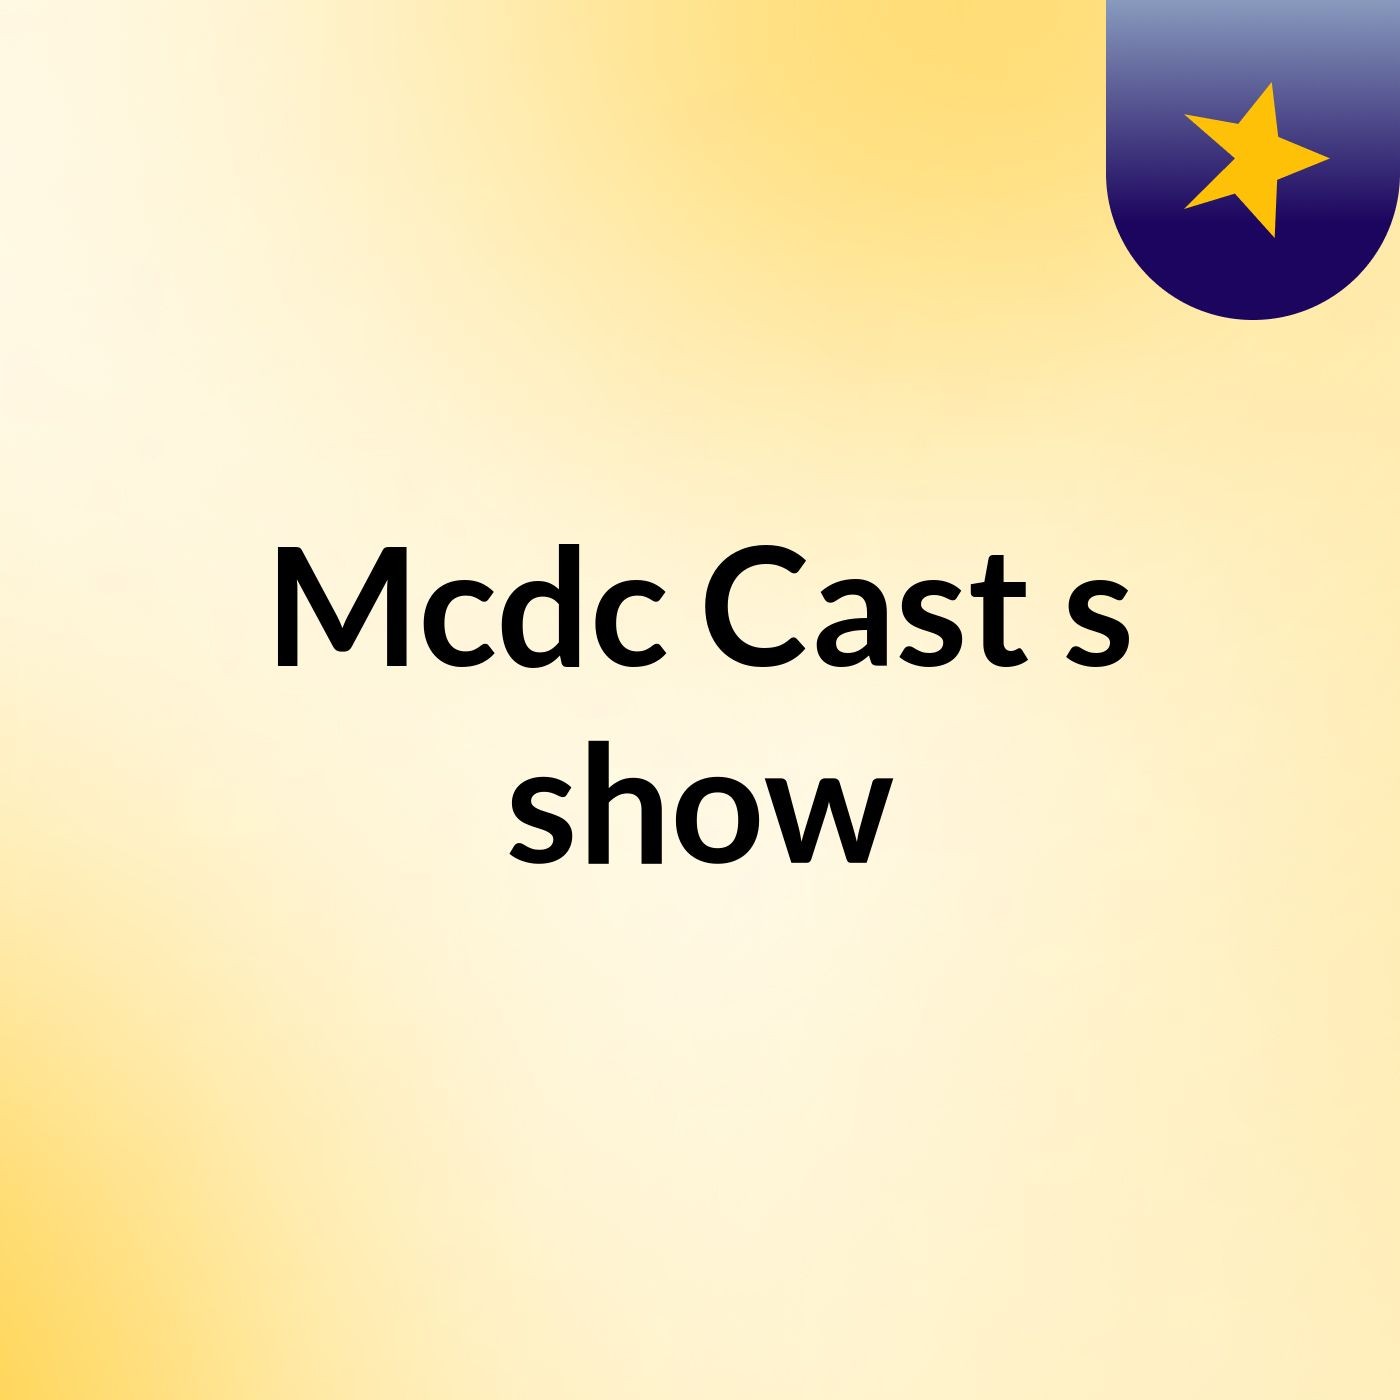 Mcdc Cast's show